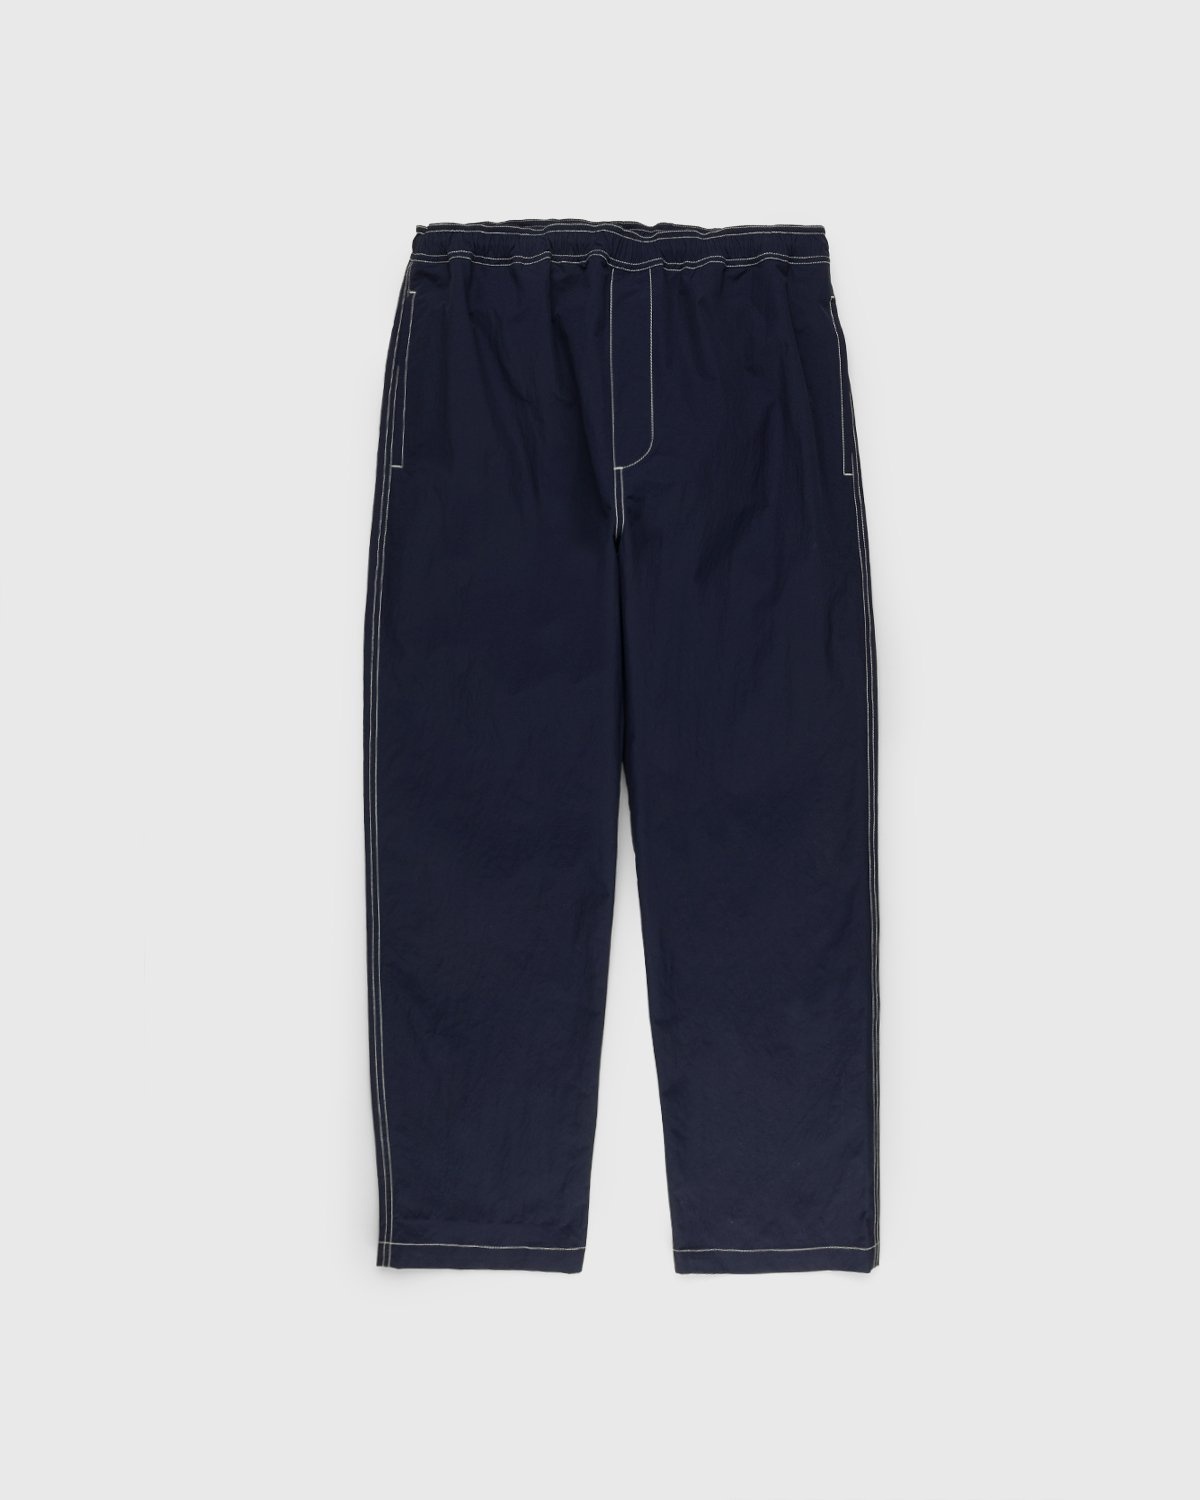 Highsnobiety – Contrast Brushed Nylon Elastic Pants Navy - Active Pants - Blue - Image 1